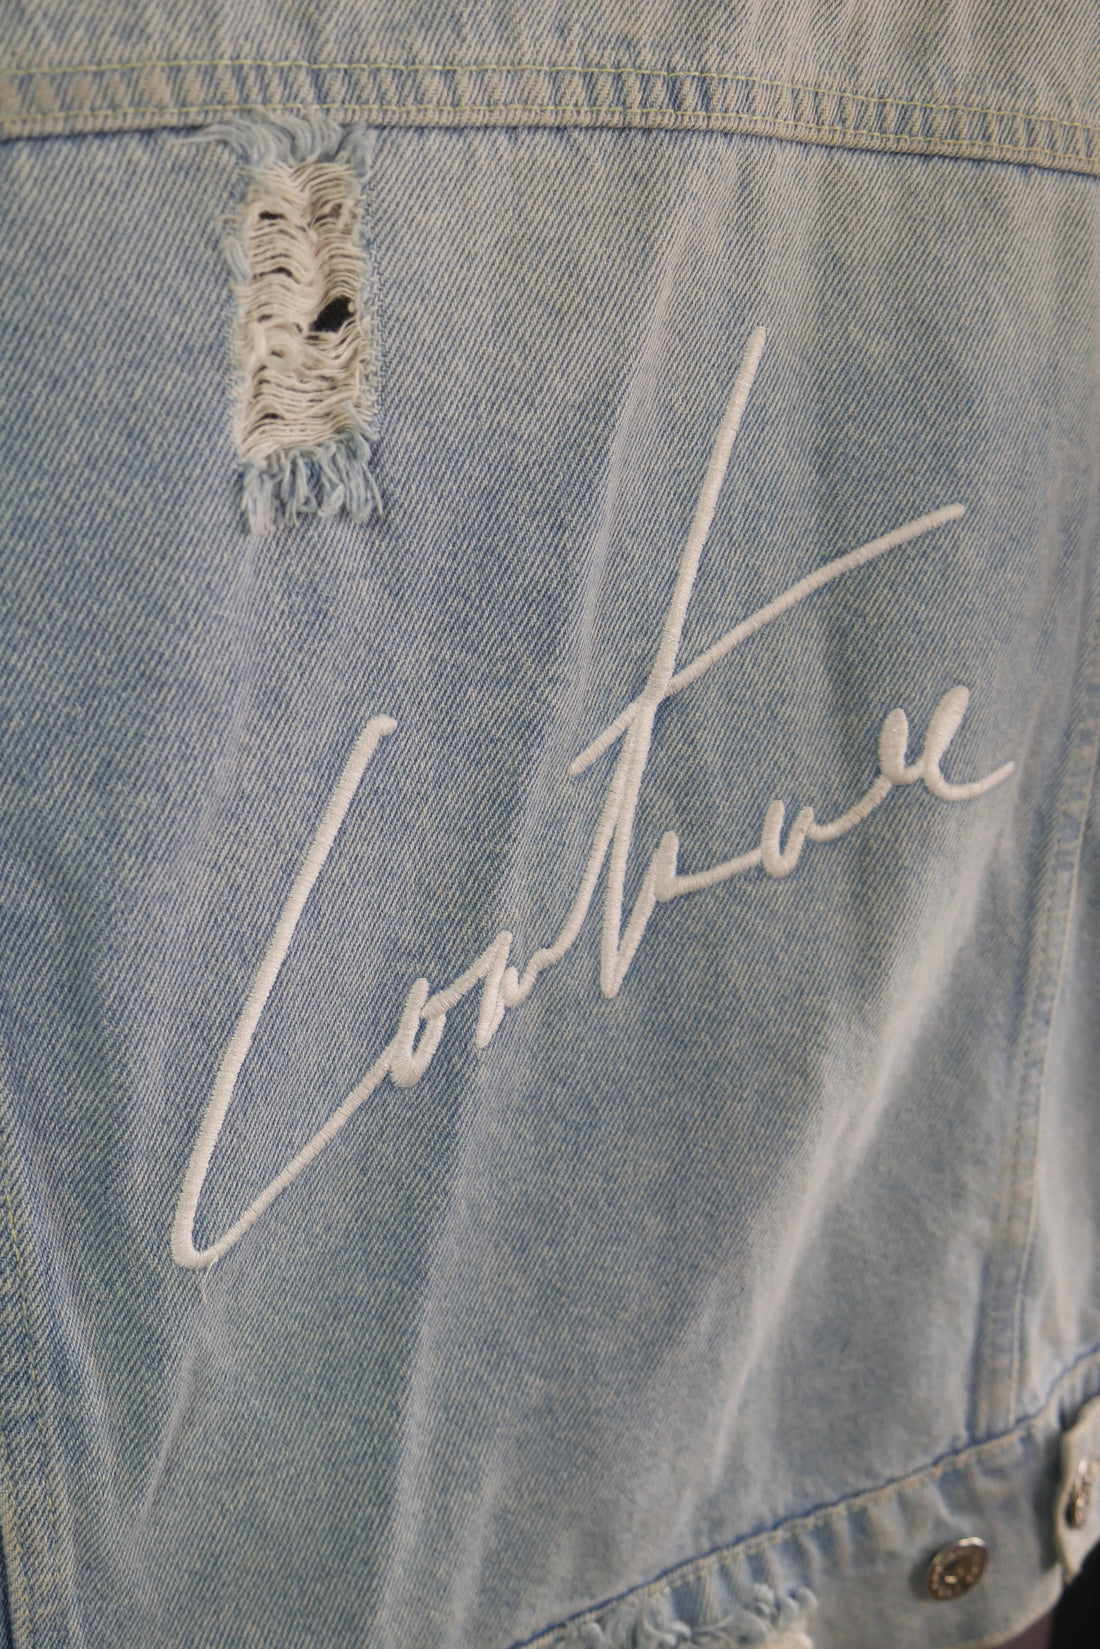 The Couture Club Denim Jacket (L)